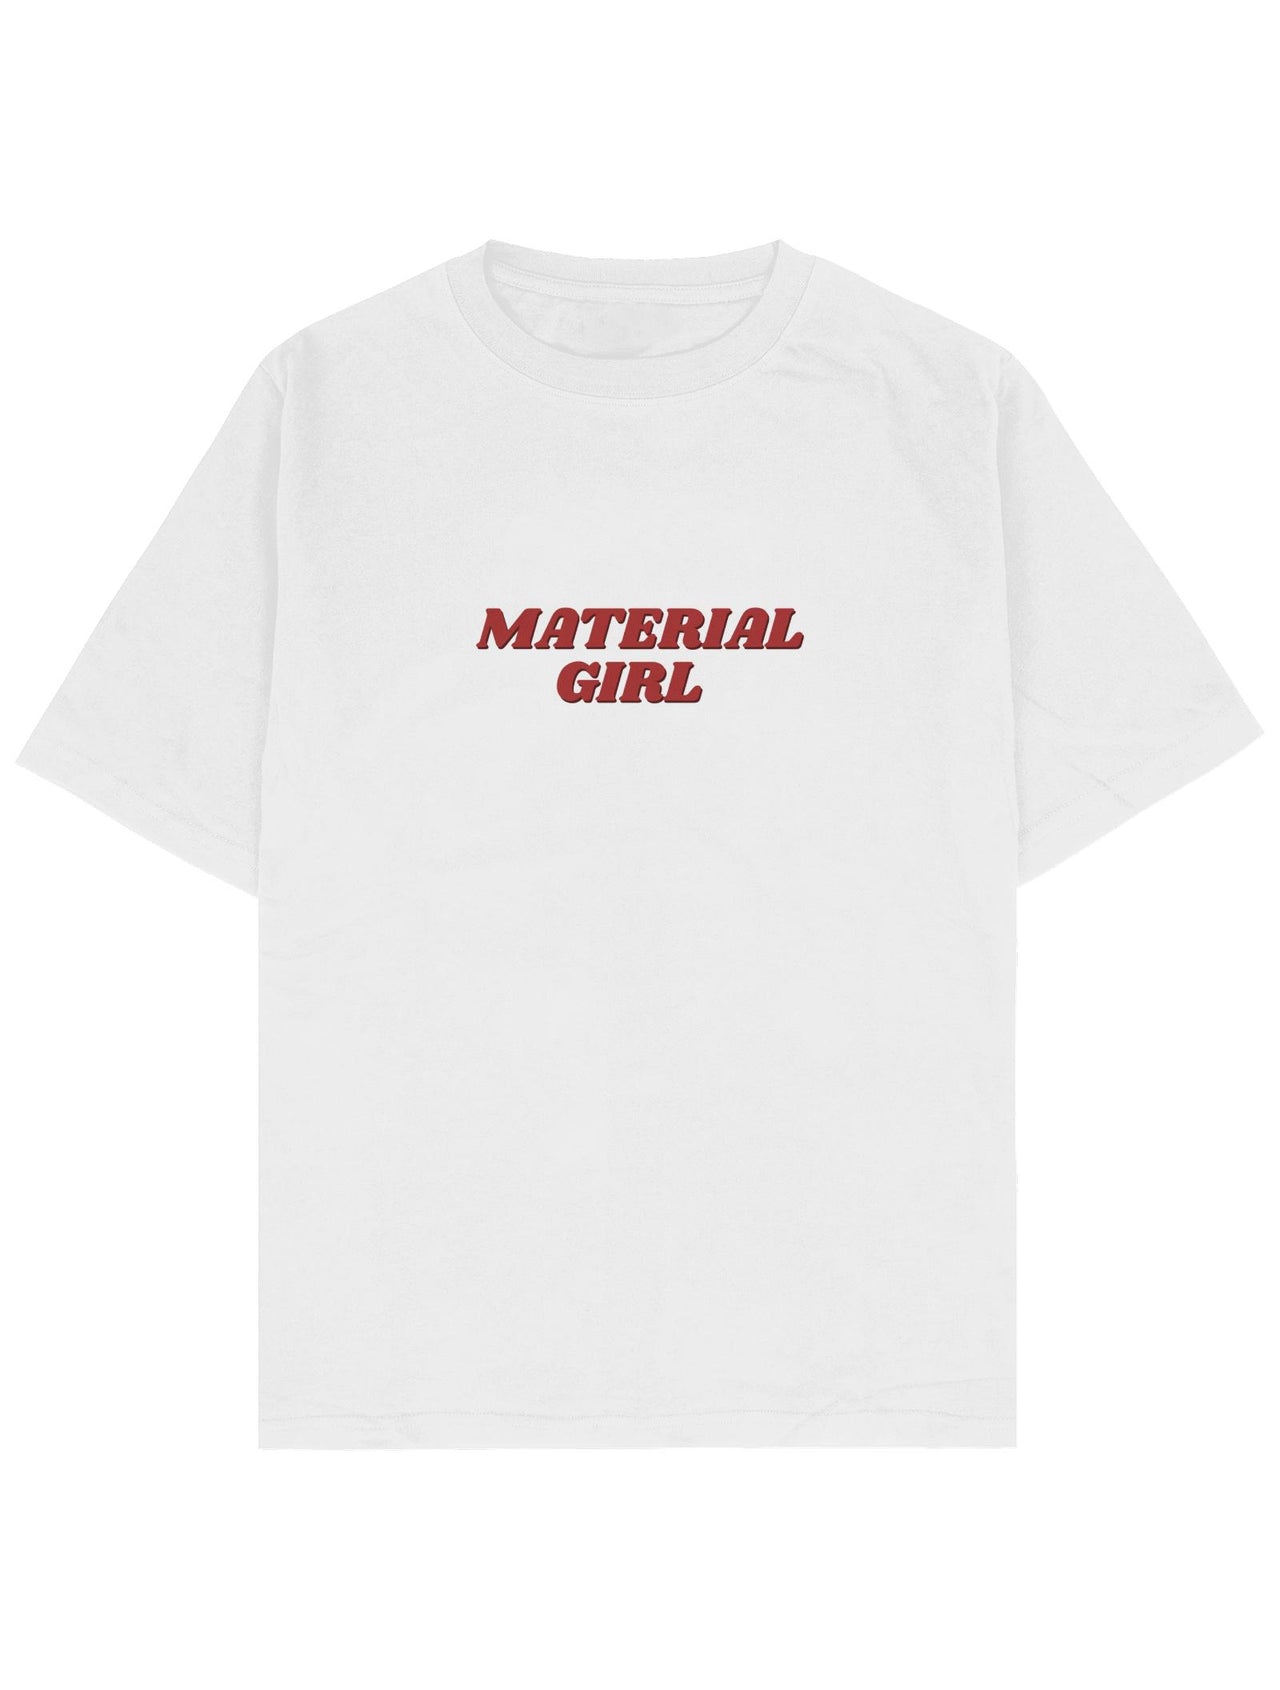 Material Girl Oversize Tee - L White